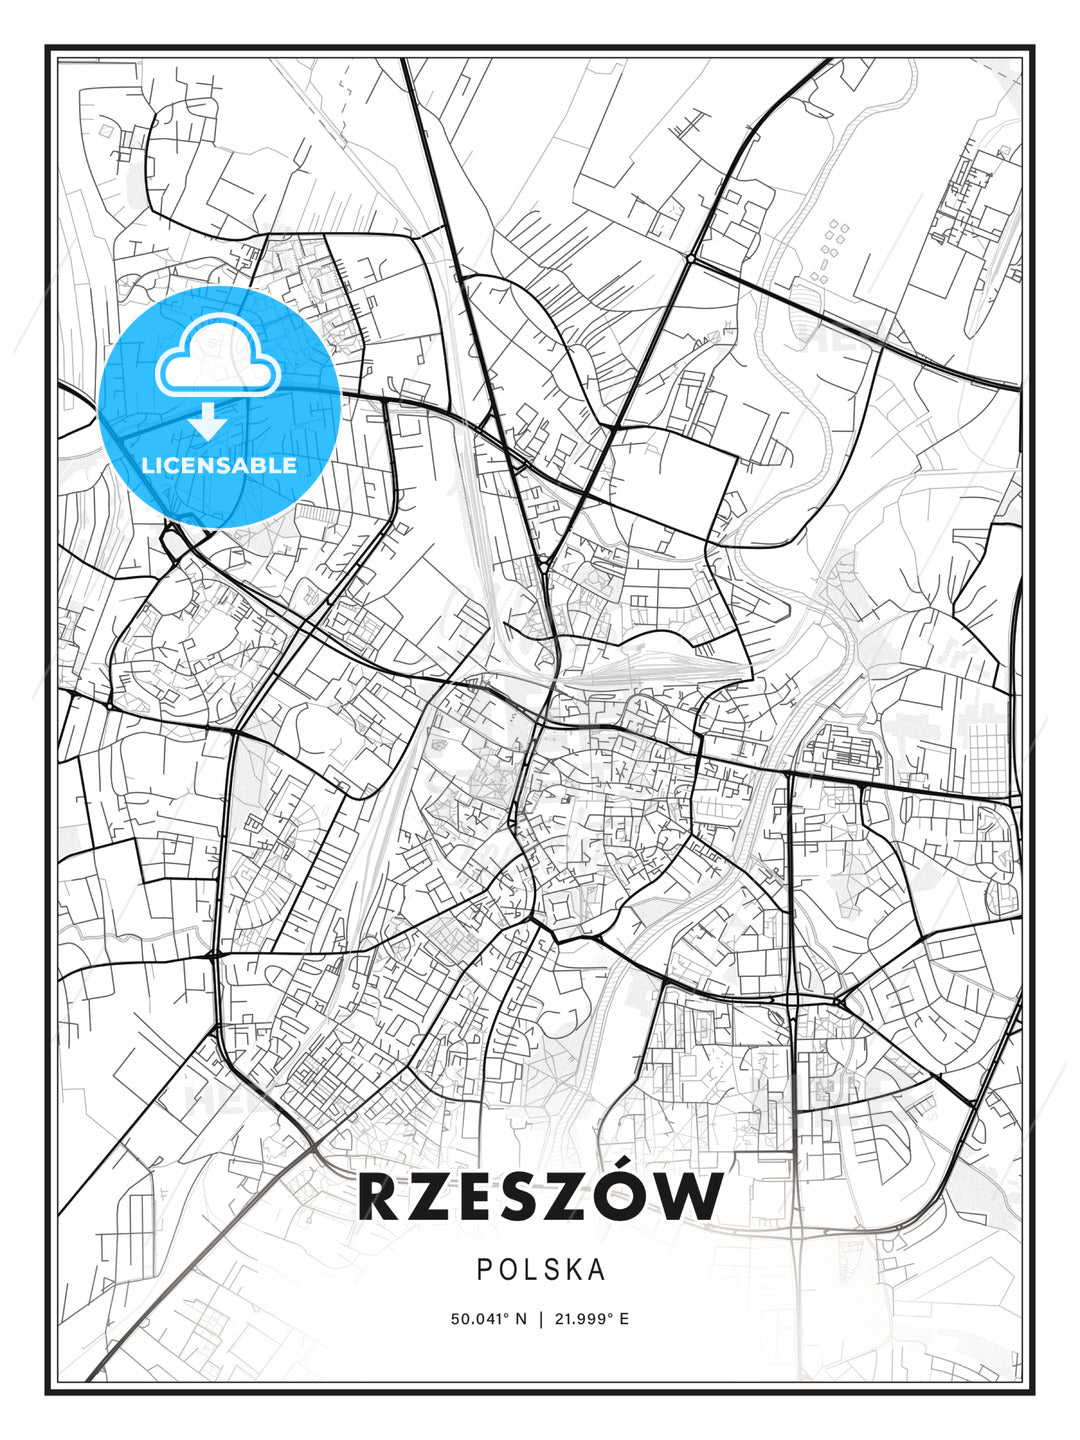 Rzeszów, Poland, Modern Print Template in Various Formats - HEBSTREITS Sketches